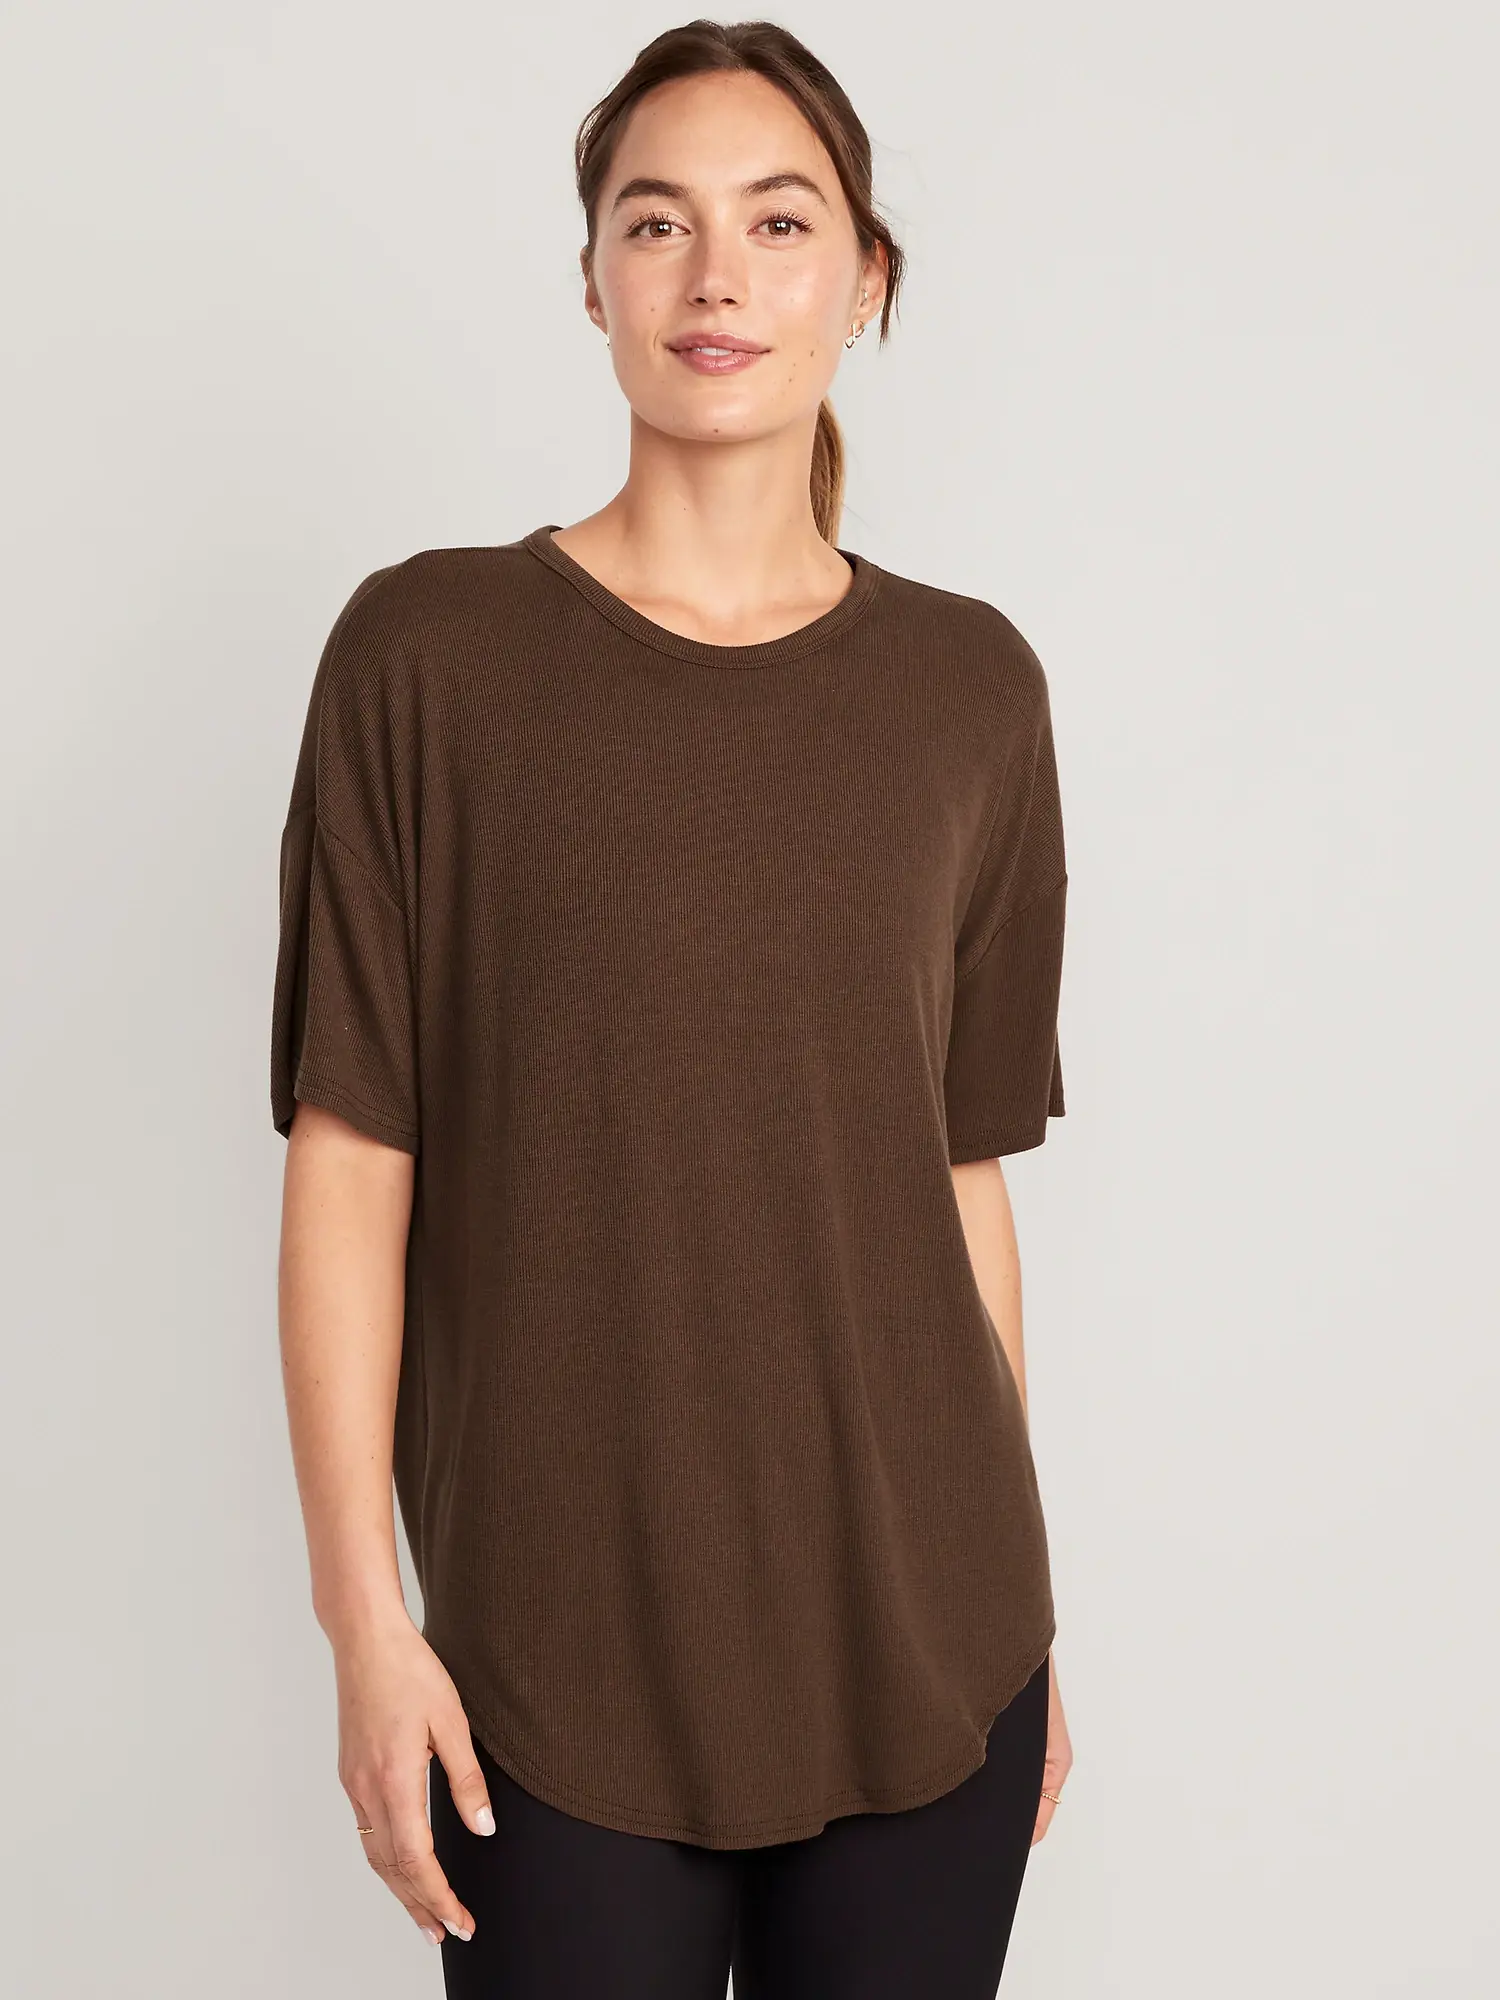 Old Navy UltraLite Rib-Knit Tunic T-Shirt for Women brown. 1